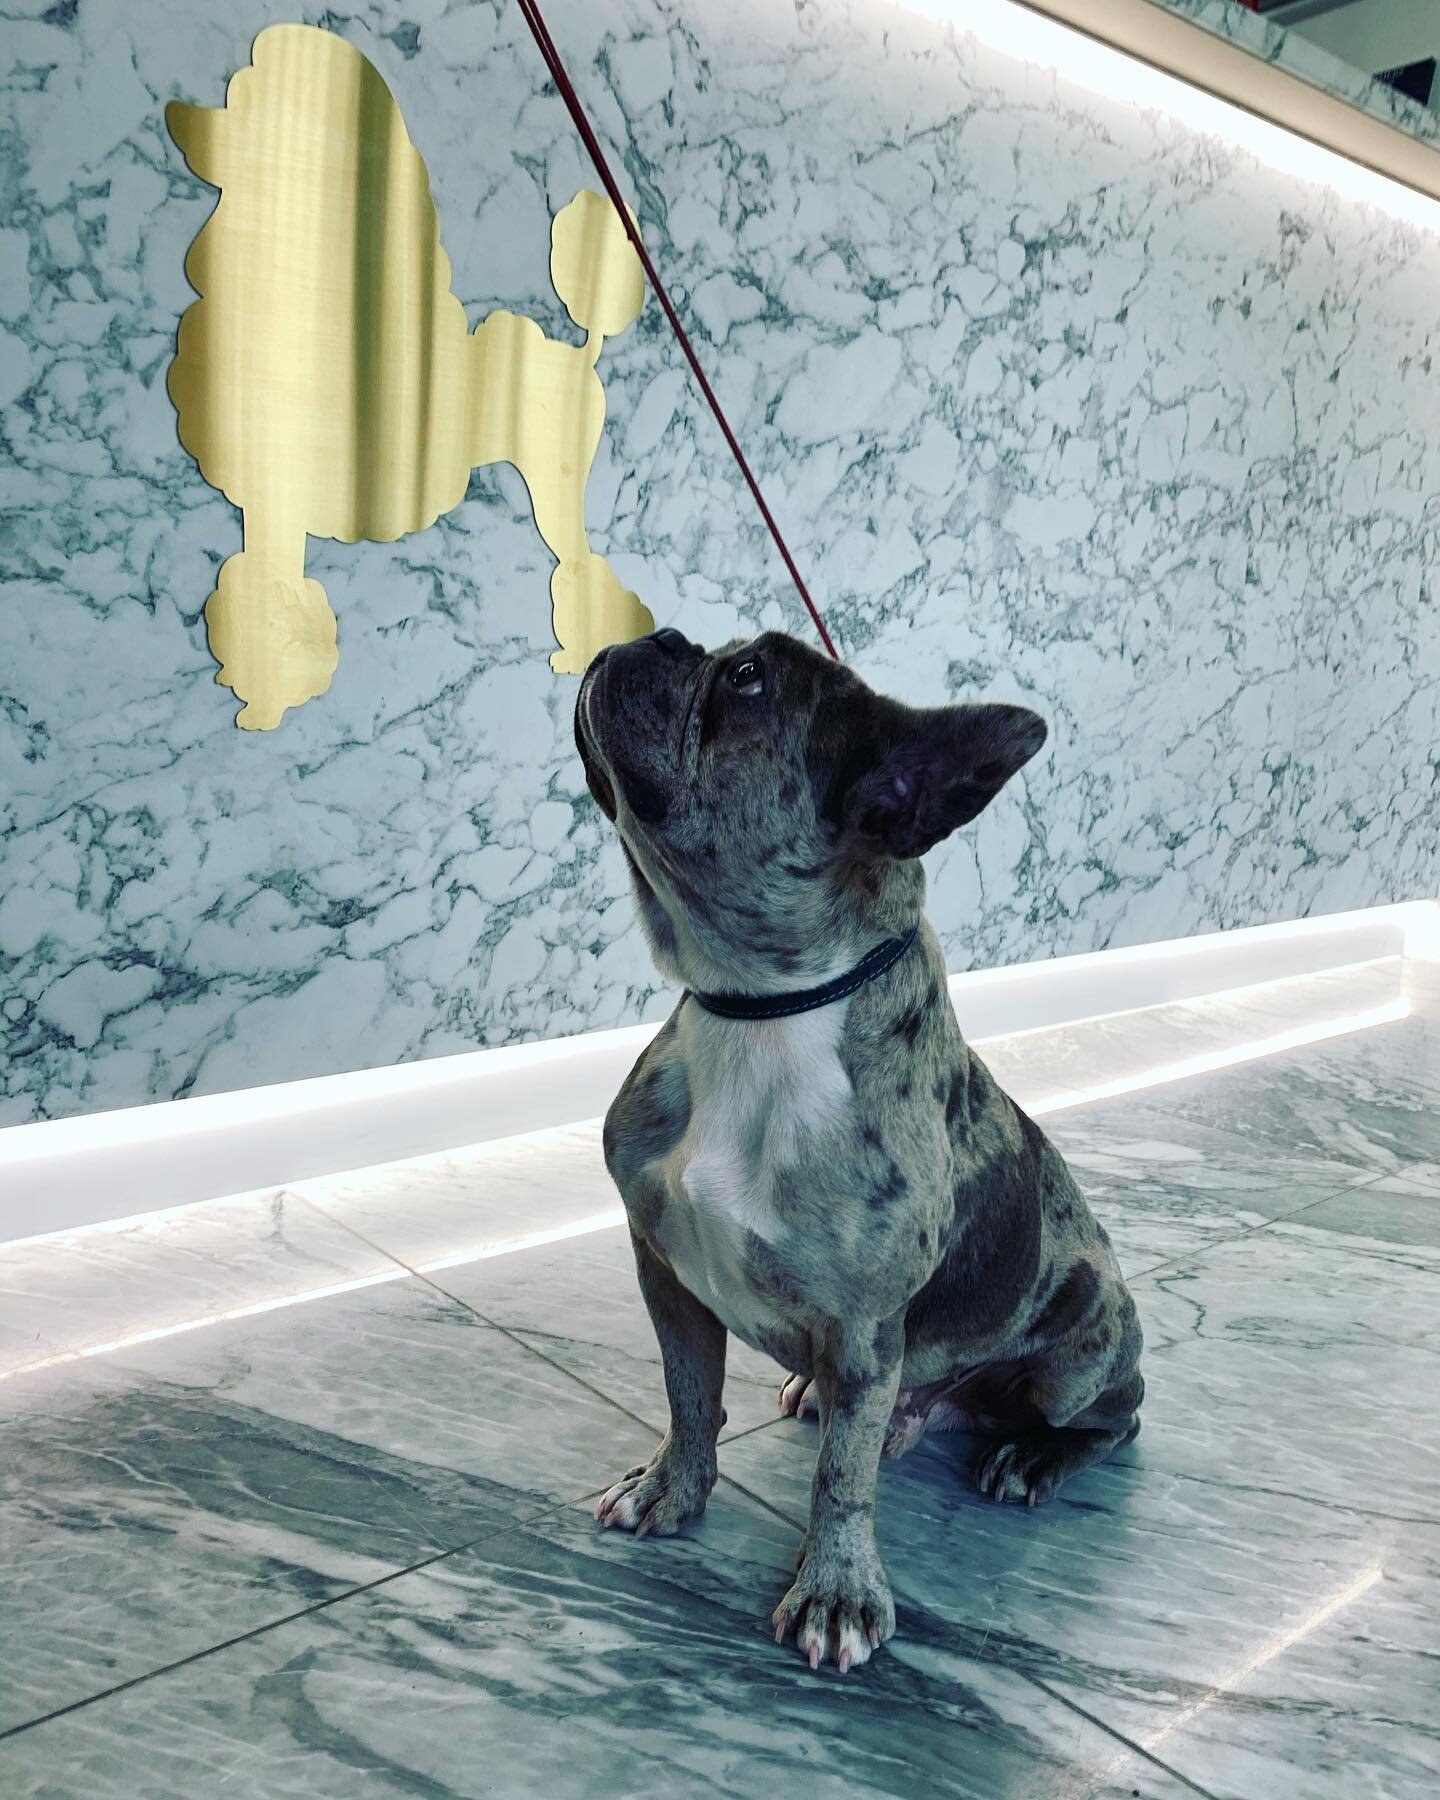 He matches the marble floor 🤣😍 
.
.
.
.
.
#petspaessex #brentwood #essex #doggrooming #doggroomingofinstagram #dog #doggroomer #doggroominglife #doglover #frenchbulldog #frenchiesofinstagram #frenchie #frenchbulldogsofinstagram #frenchielove #frenc